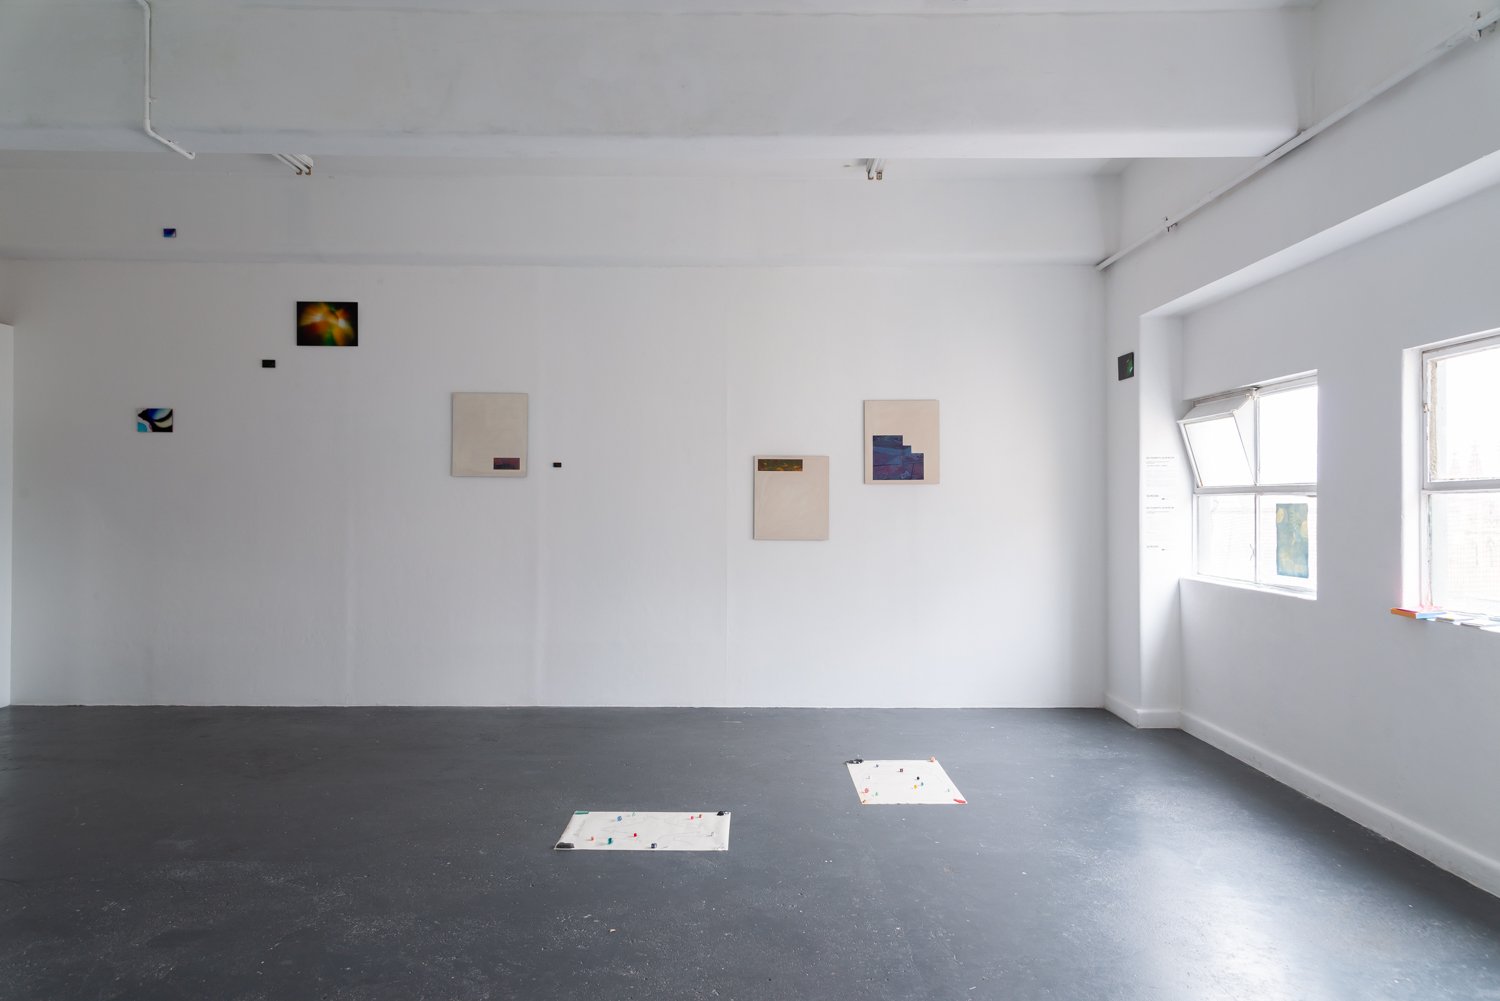  Installation view of  Odd fragments, ad infinitum  with Skye Malu Baker, Elena Misso, Michael McCafferty, and Sarah Bunting 